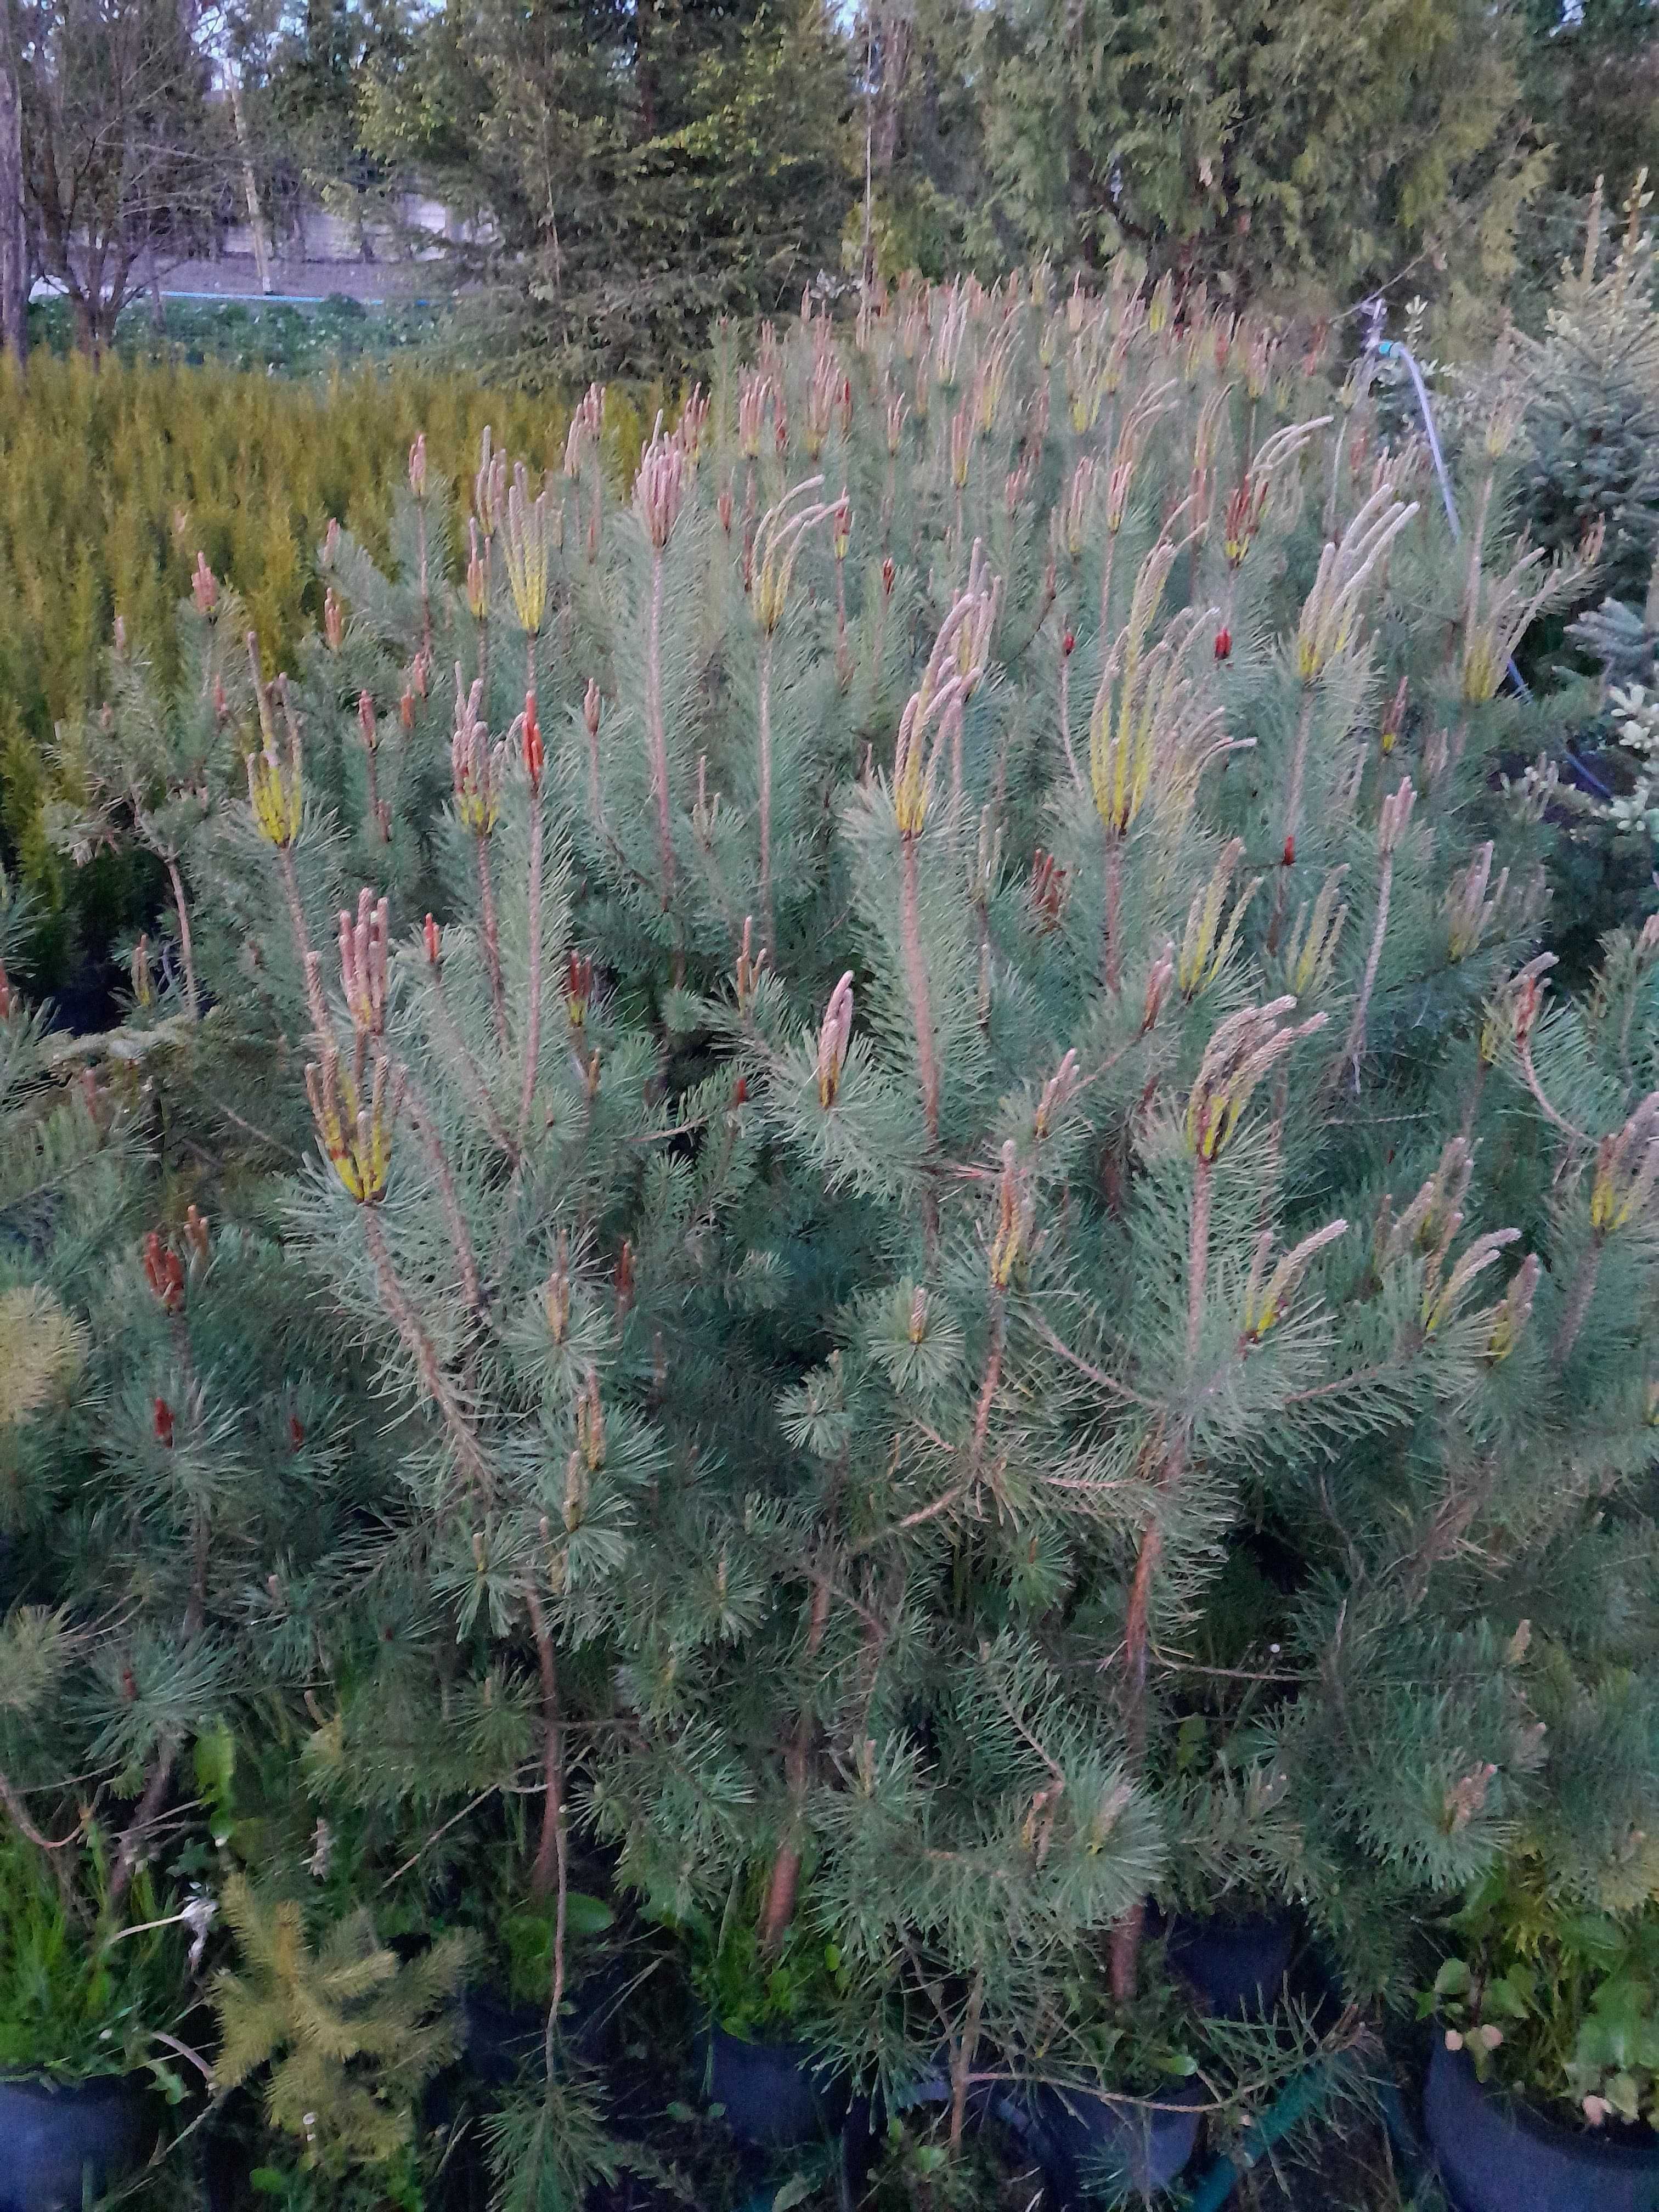 Sosna Pinus sylvestris w donicy 4 letnia do 60cm